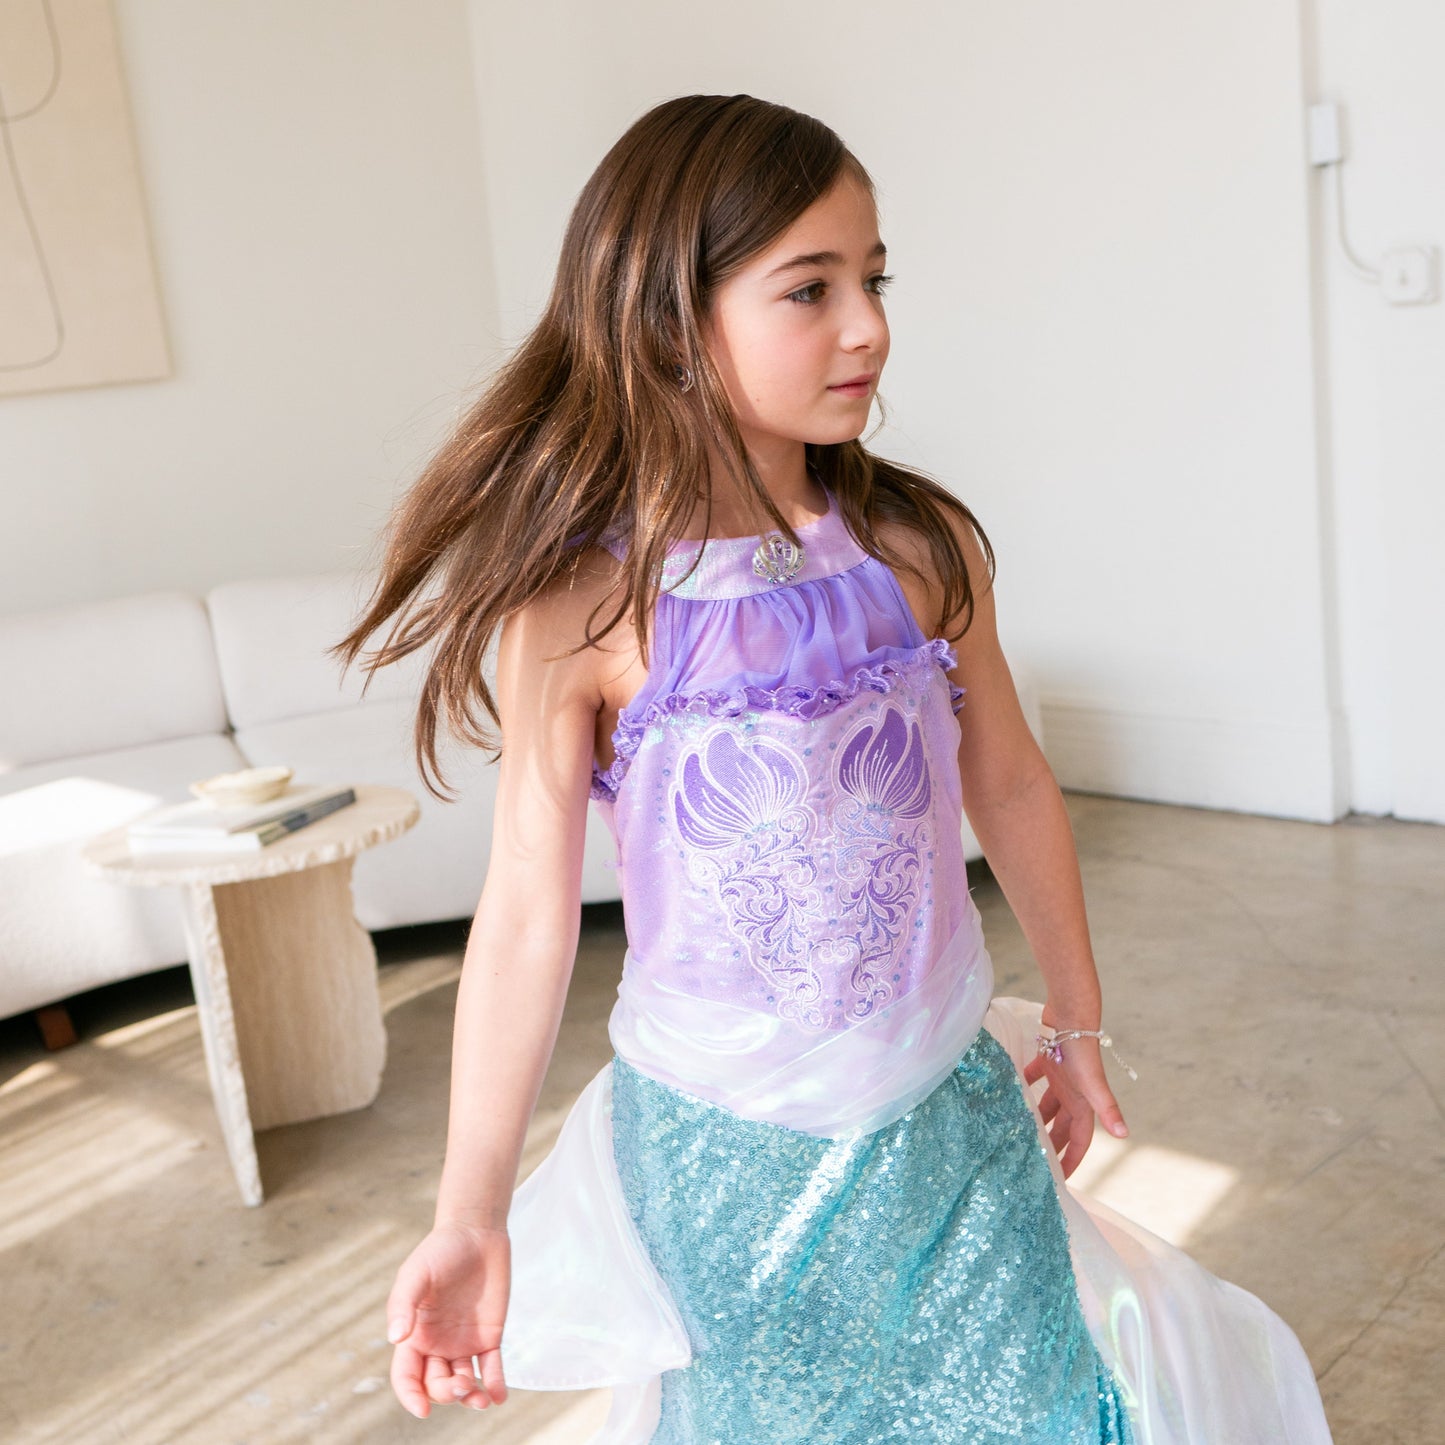 Disney The Little Mermaid Ariel Costume